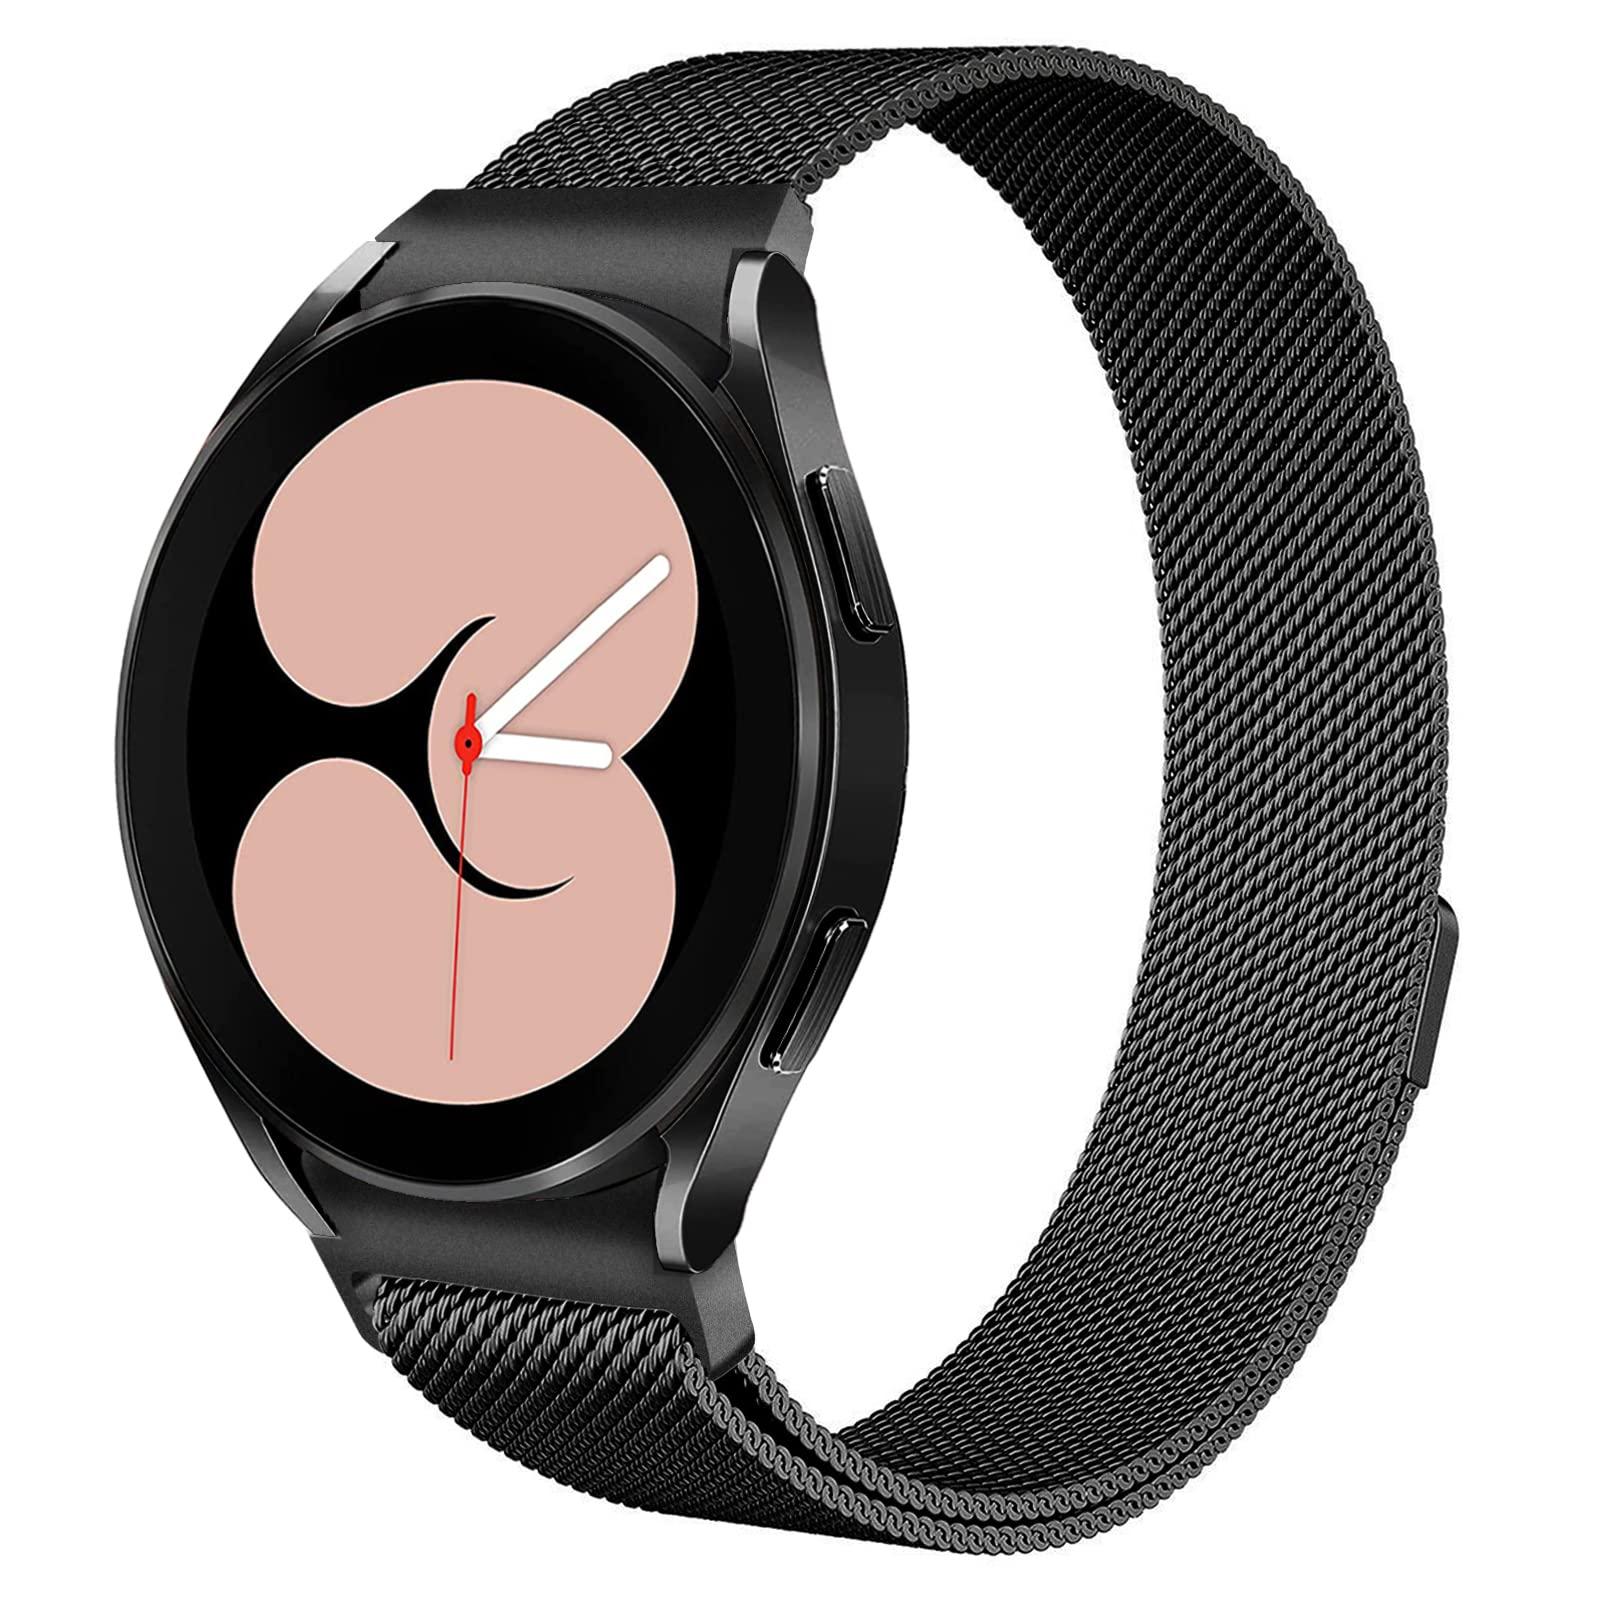 سوار ساعة سامسونج (حزام ساعة) ستانليس ستيل 20 مم – أسود  O Ozone Bands Compatible with Samsung Galaxy Watch 4